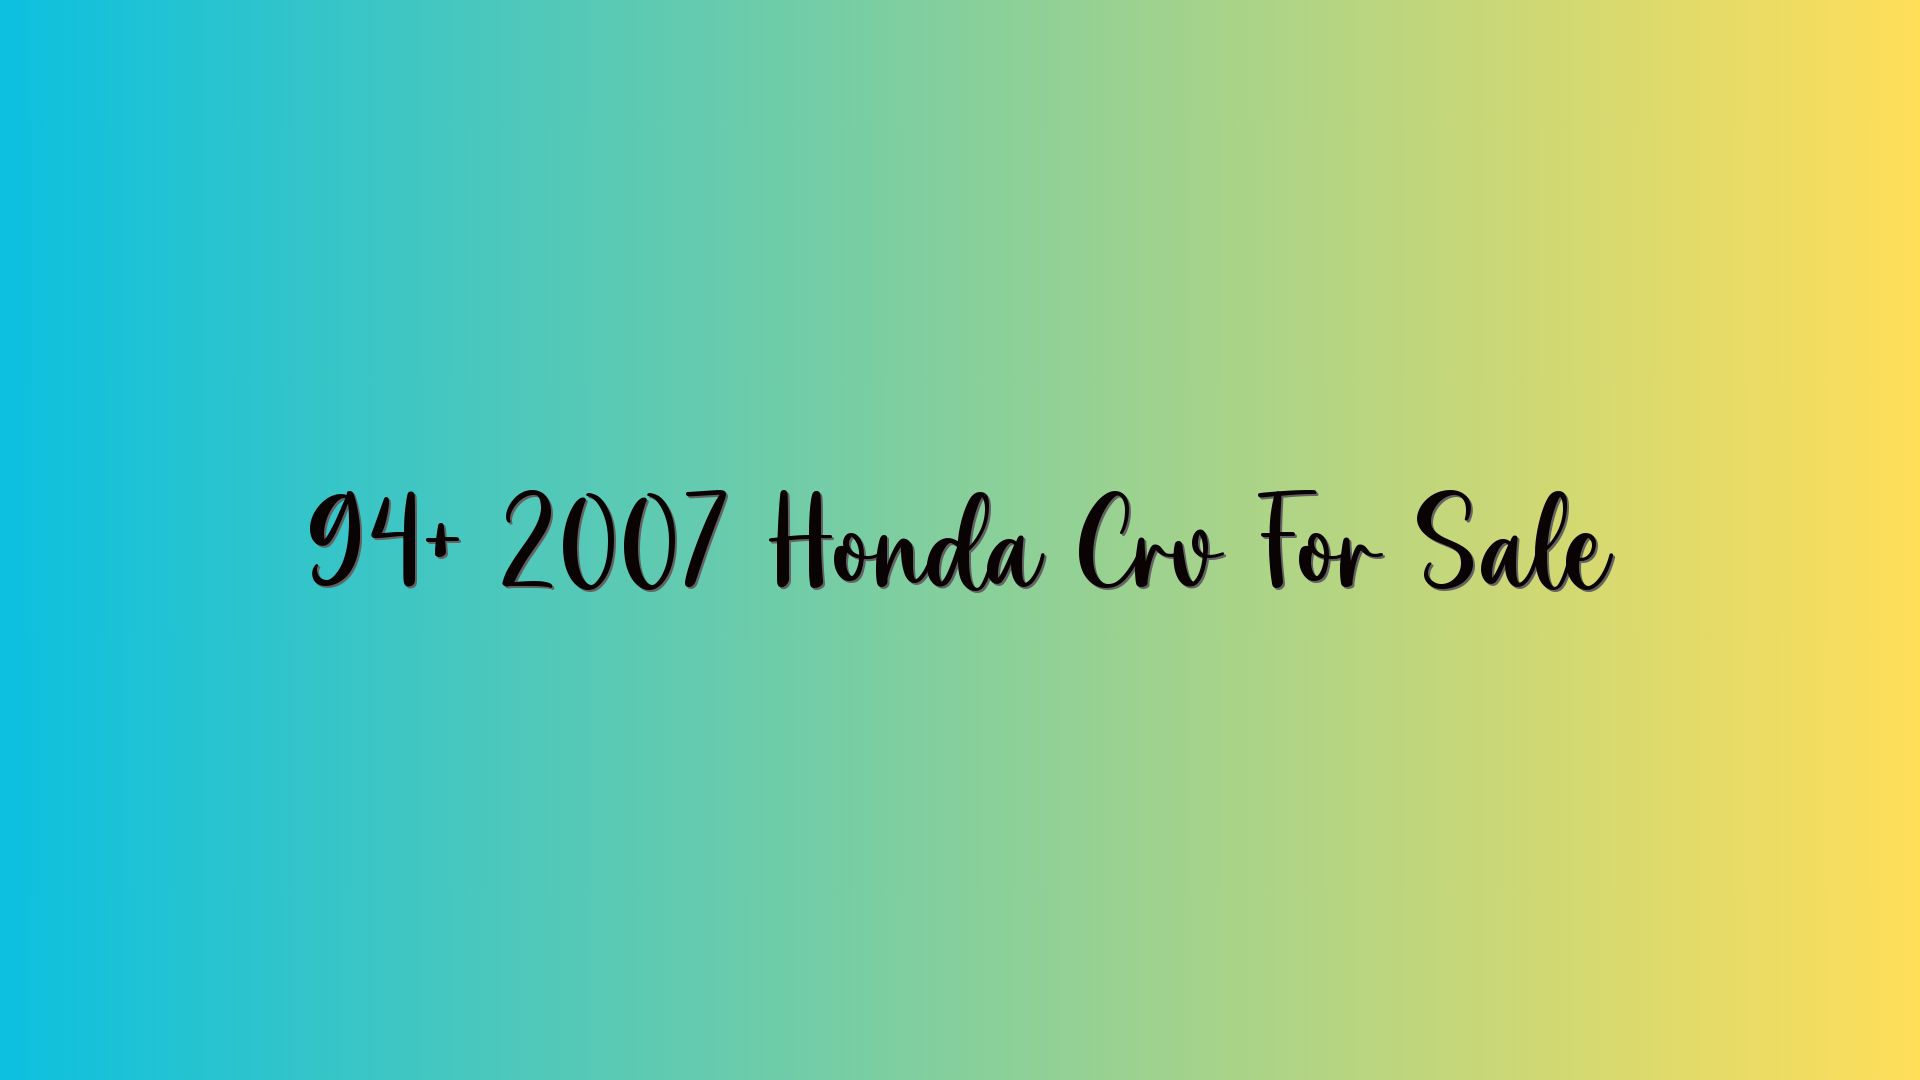 94+ 2007 Honda Crv For Sale